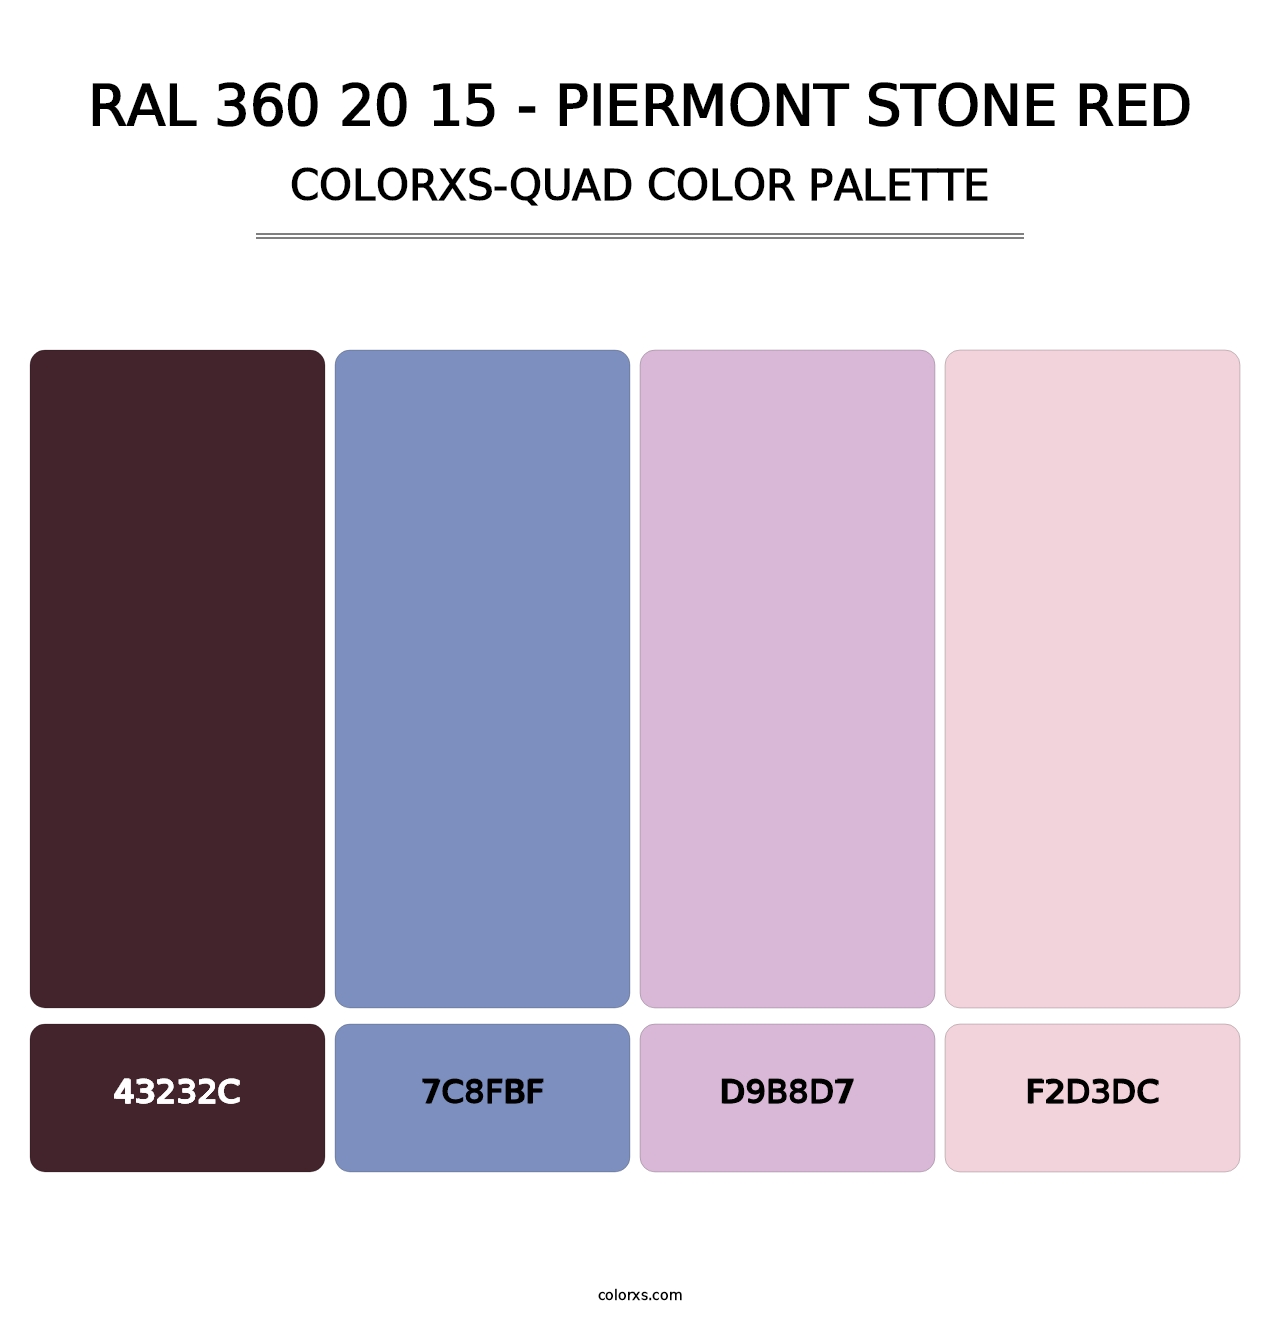 RAL 360 20 15 - Piermont Stone Red - Colorxs Quad Palette